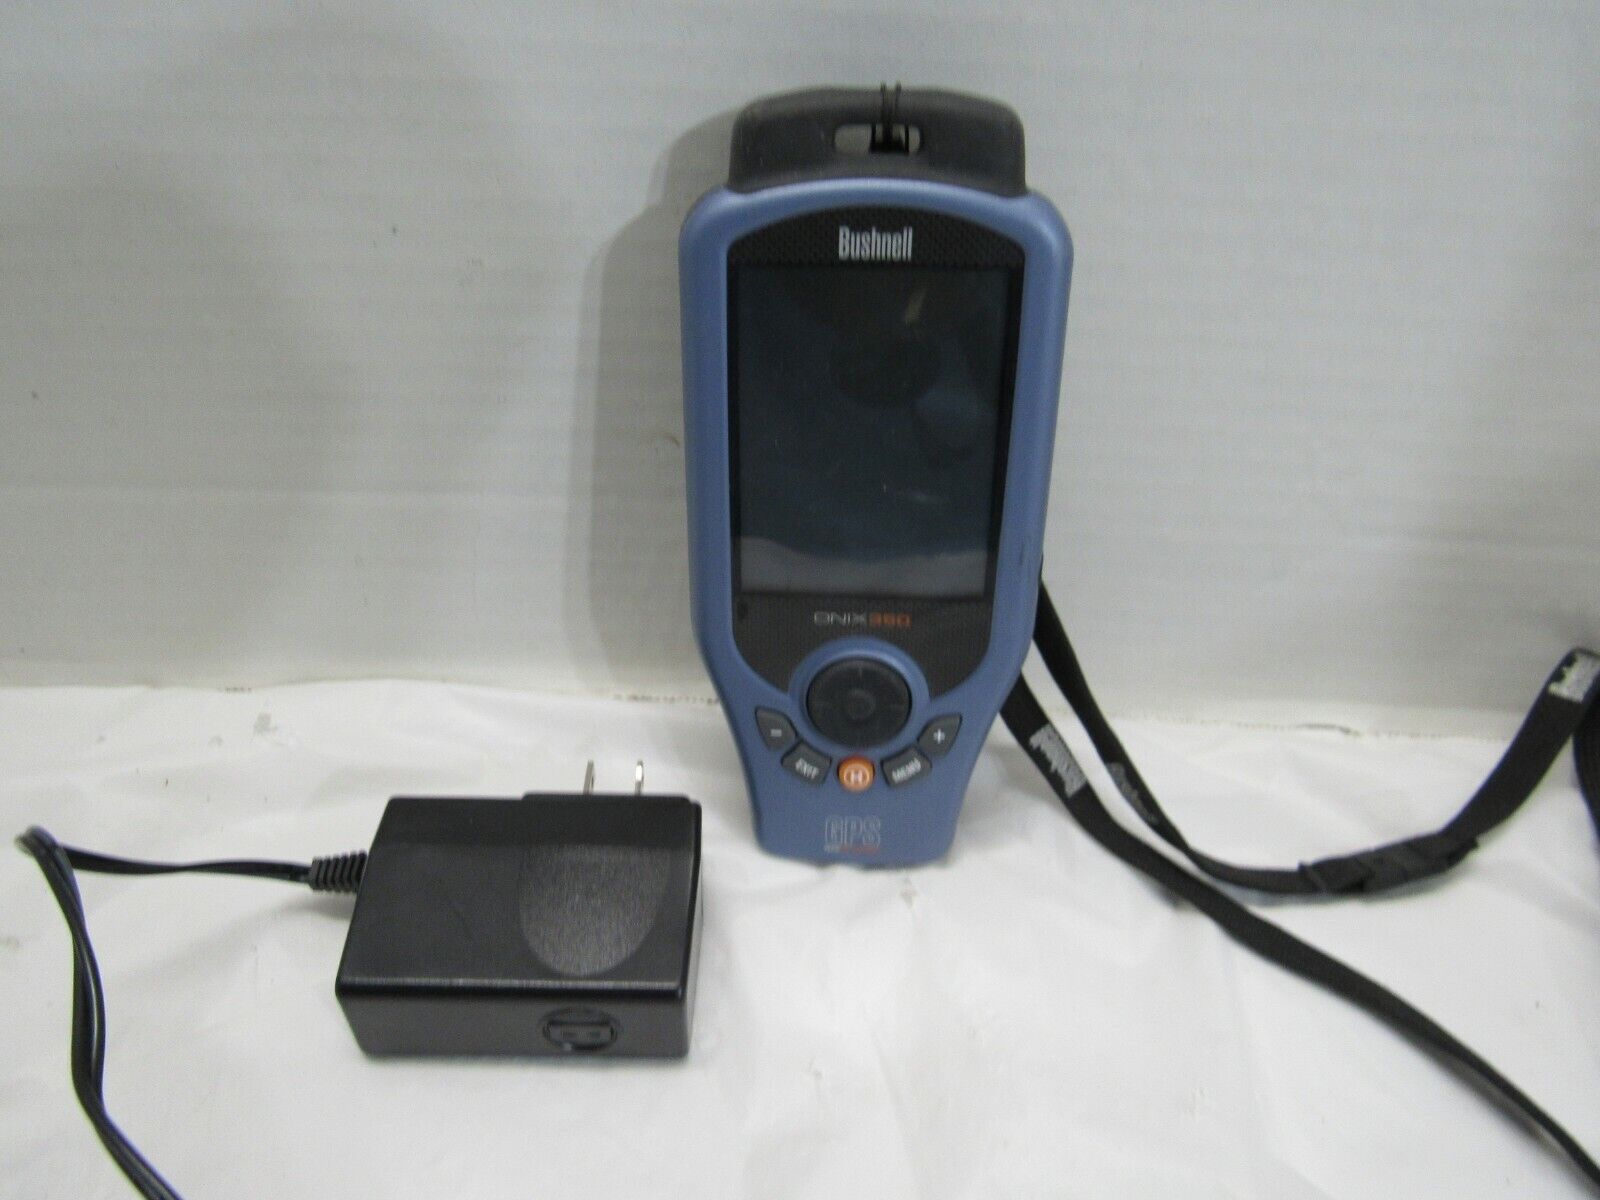 Bushnell ONIX350 Handheld GPS